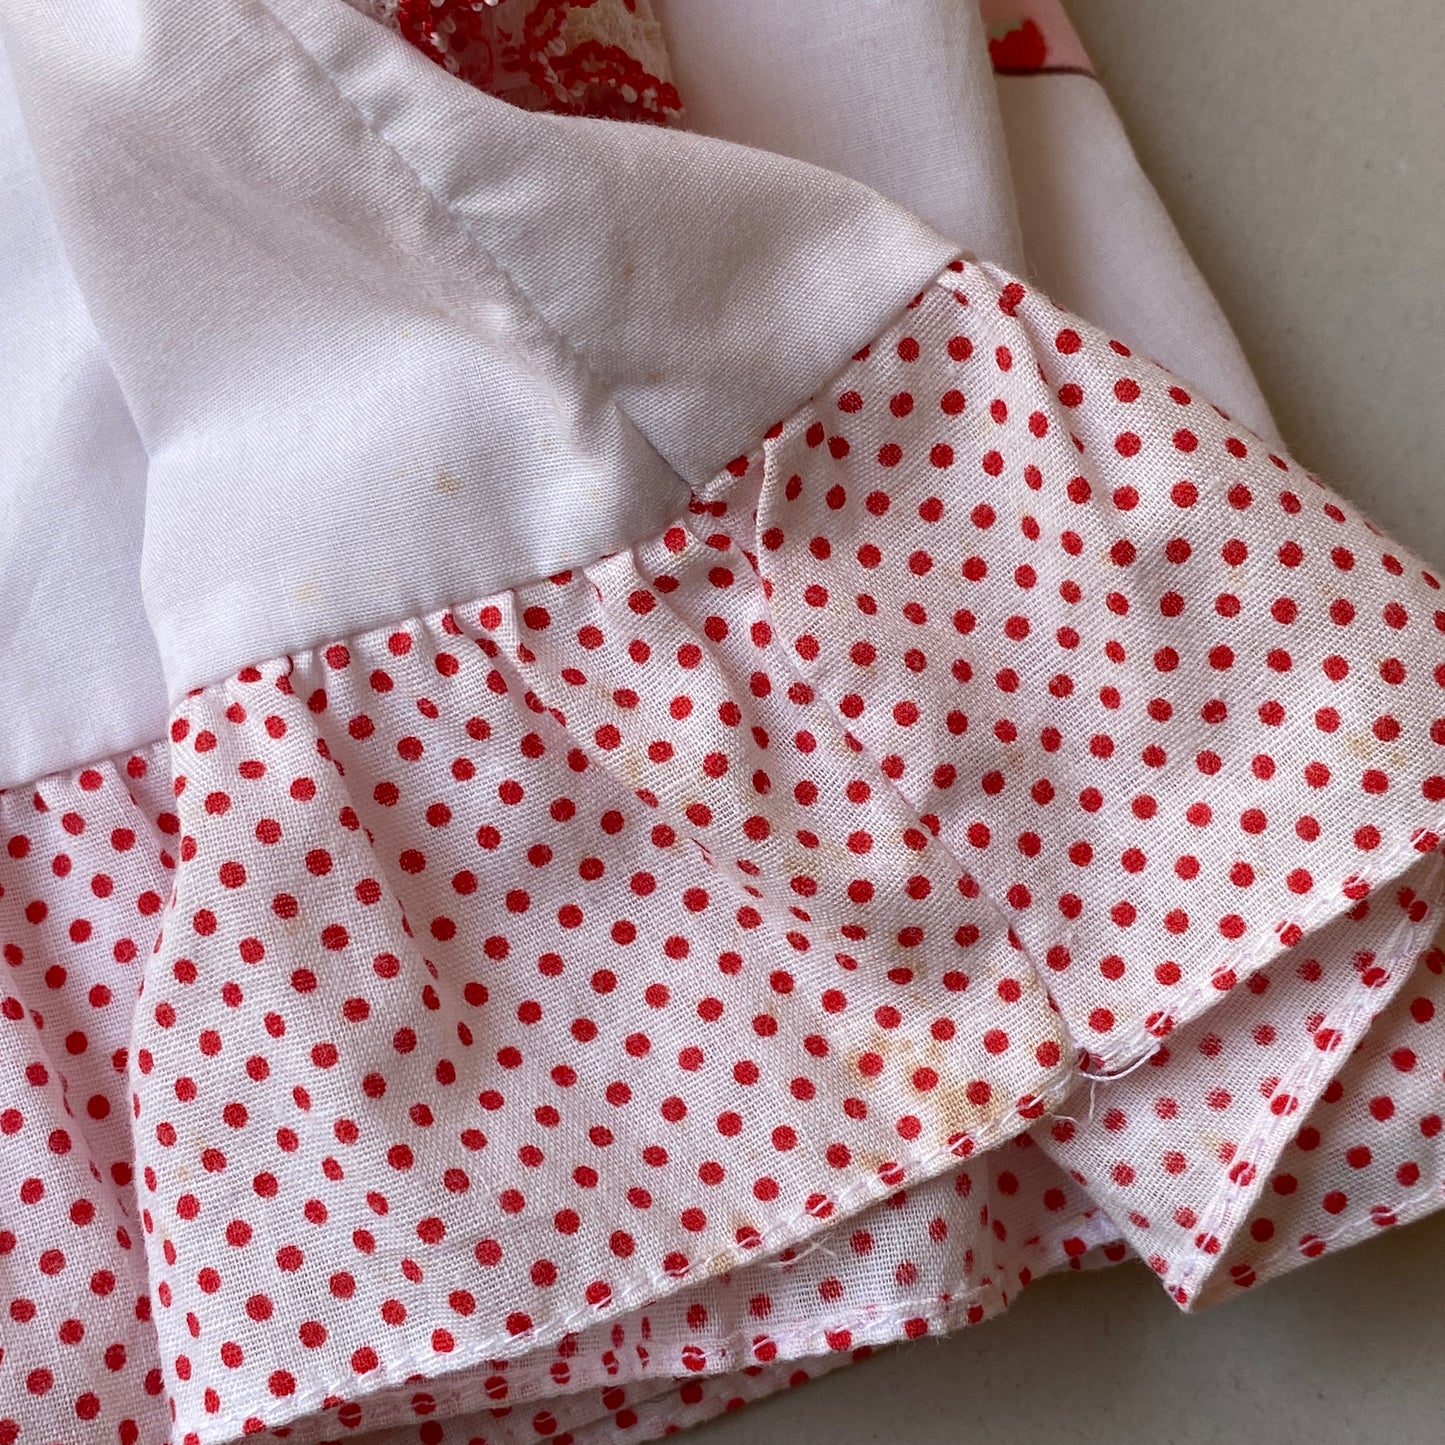 Vintage Strawberry Shortcake Collared Polka Dress (12M)